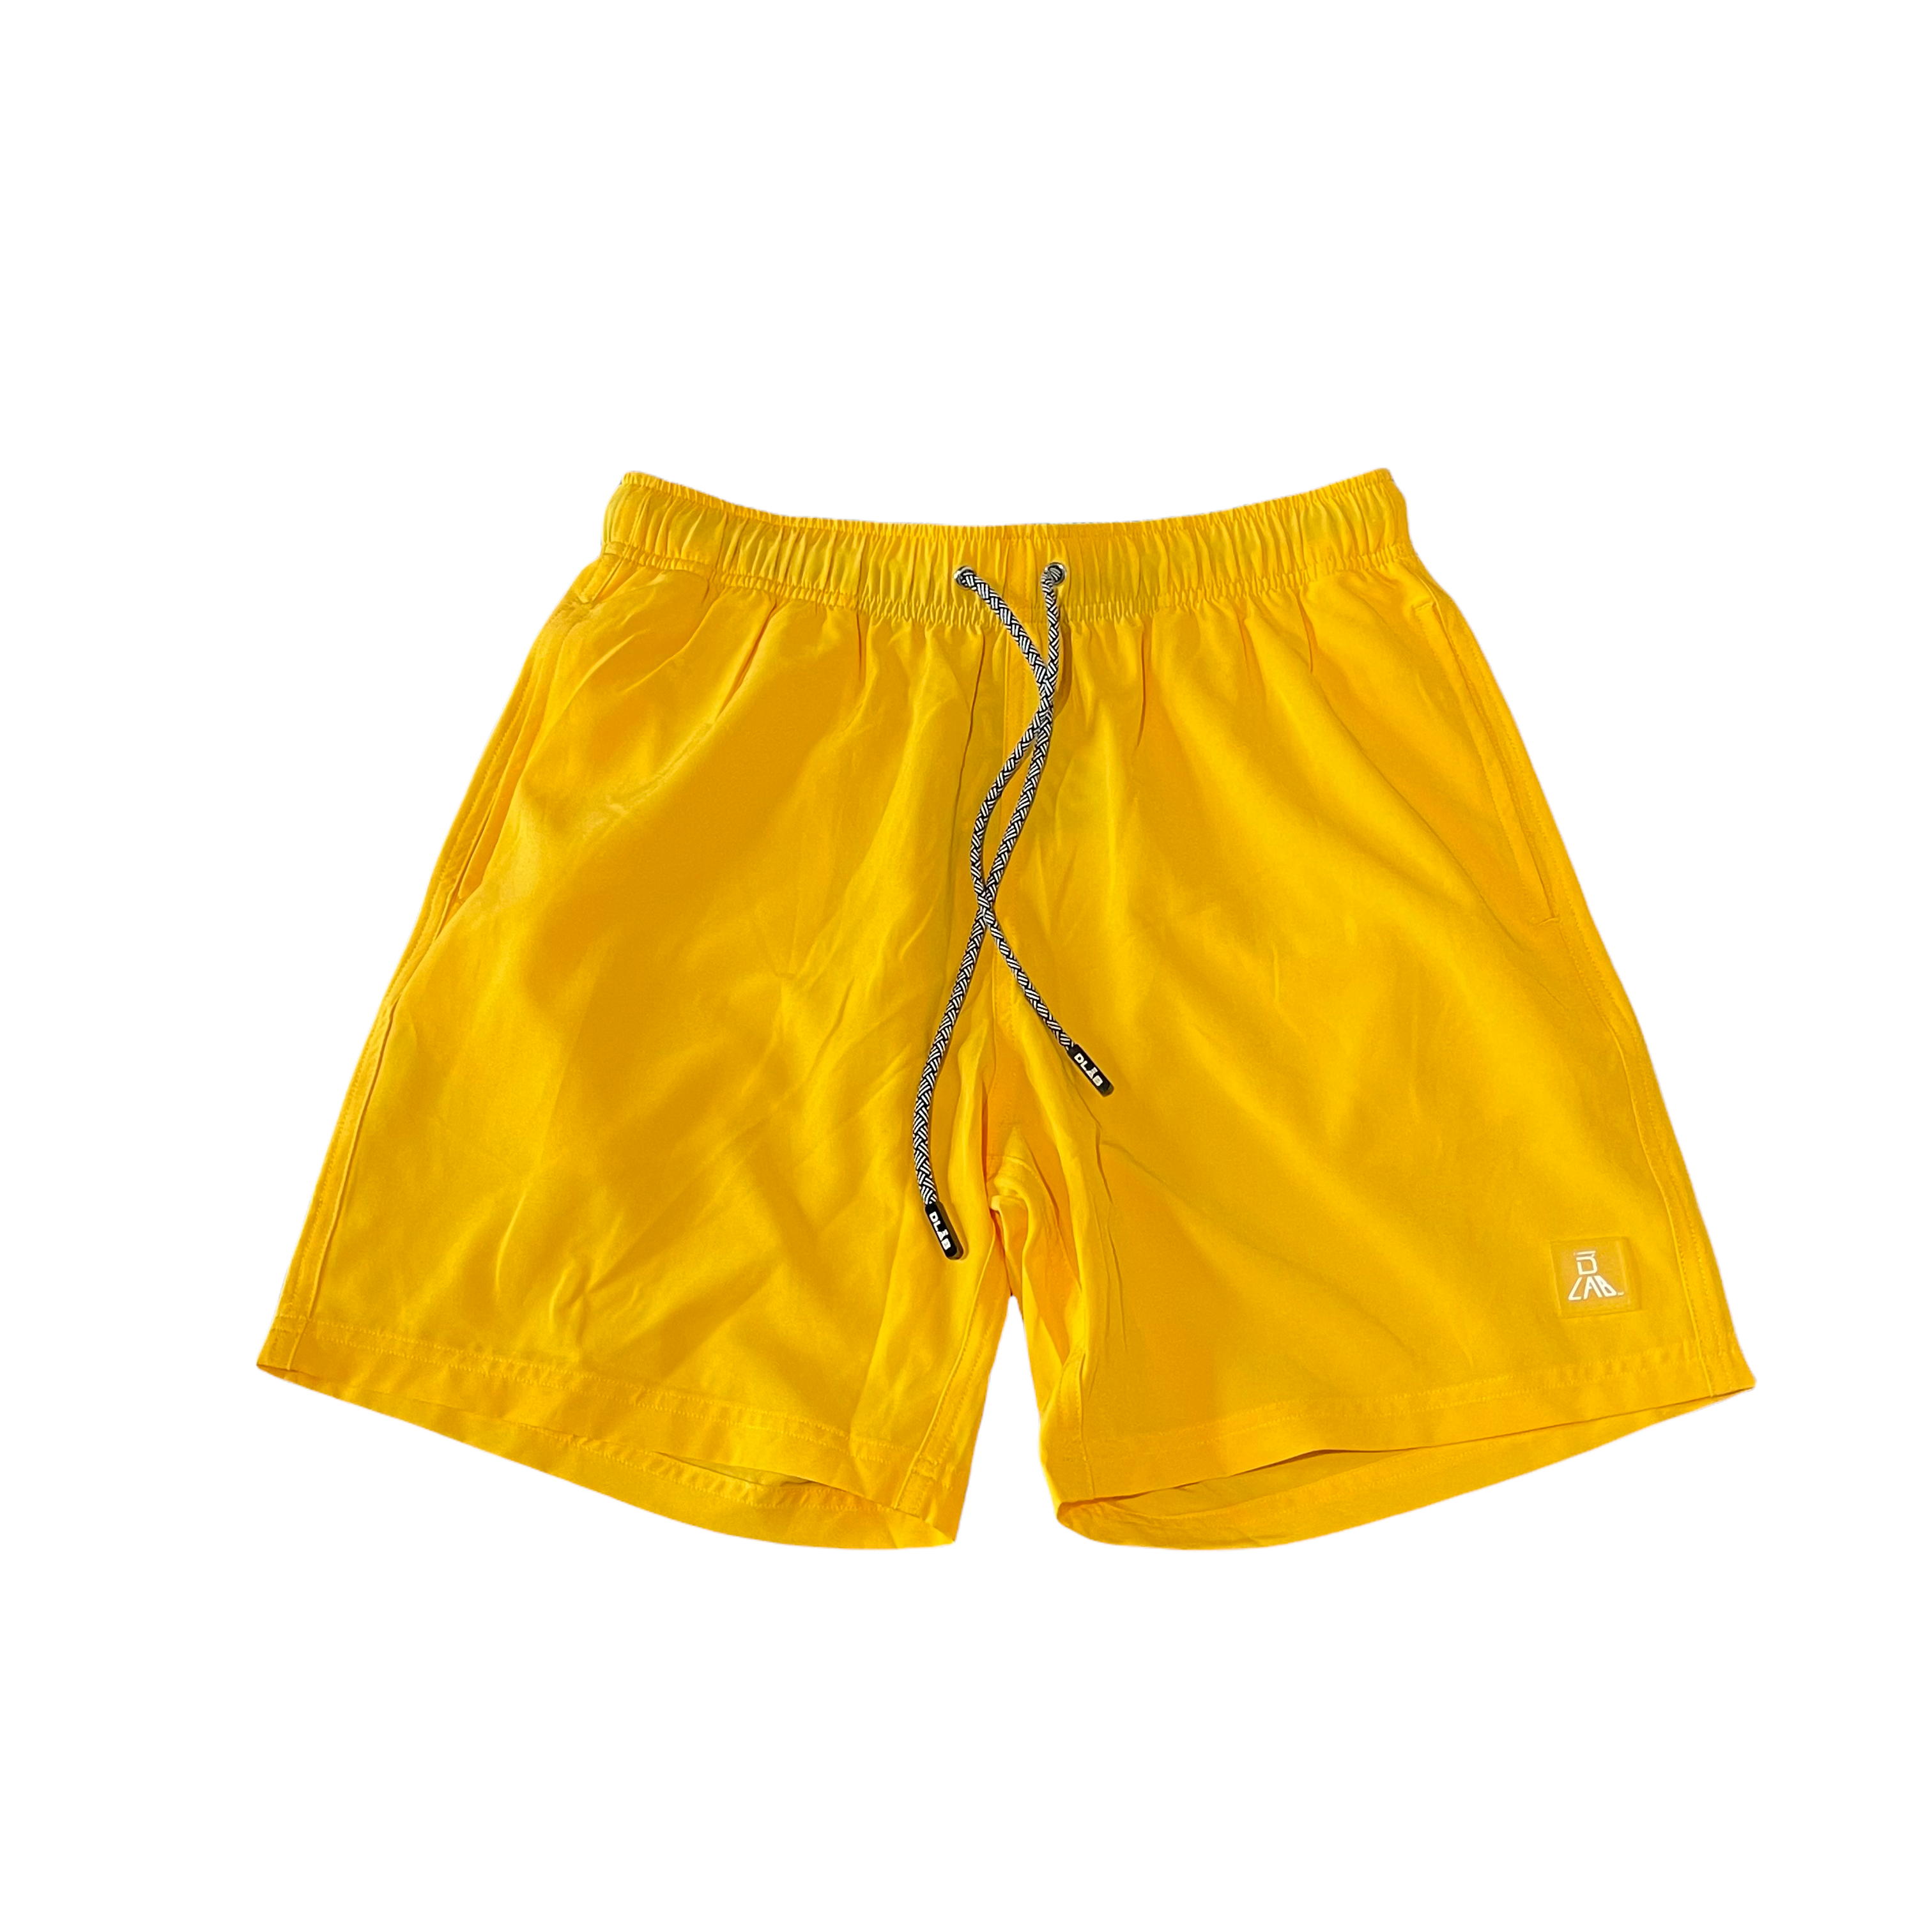 DLAB Men's Hybrid Board Shorts (Yellow)